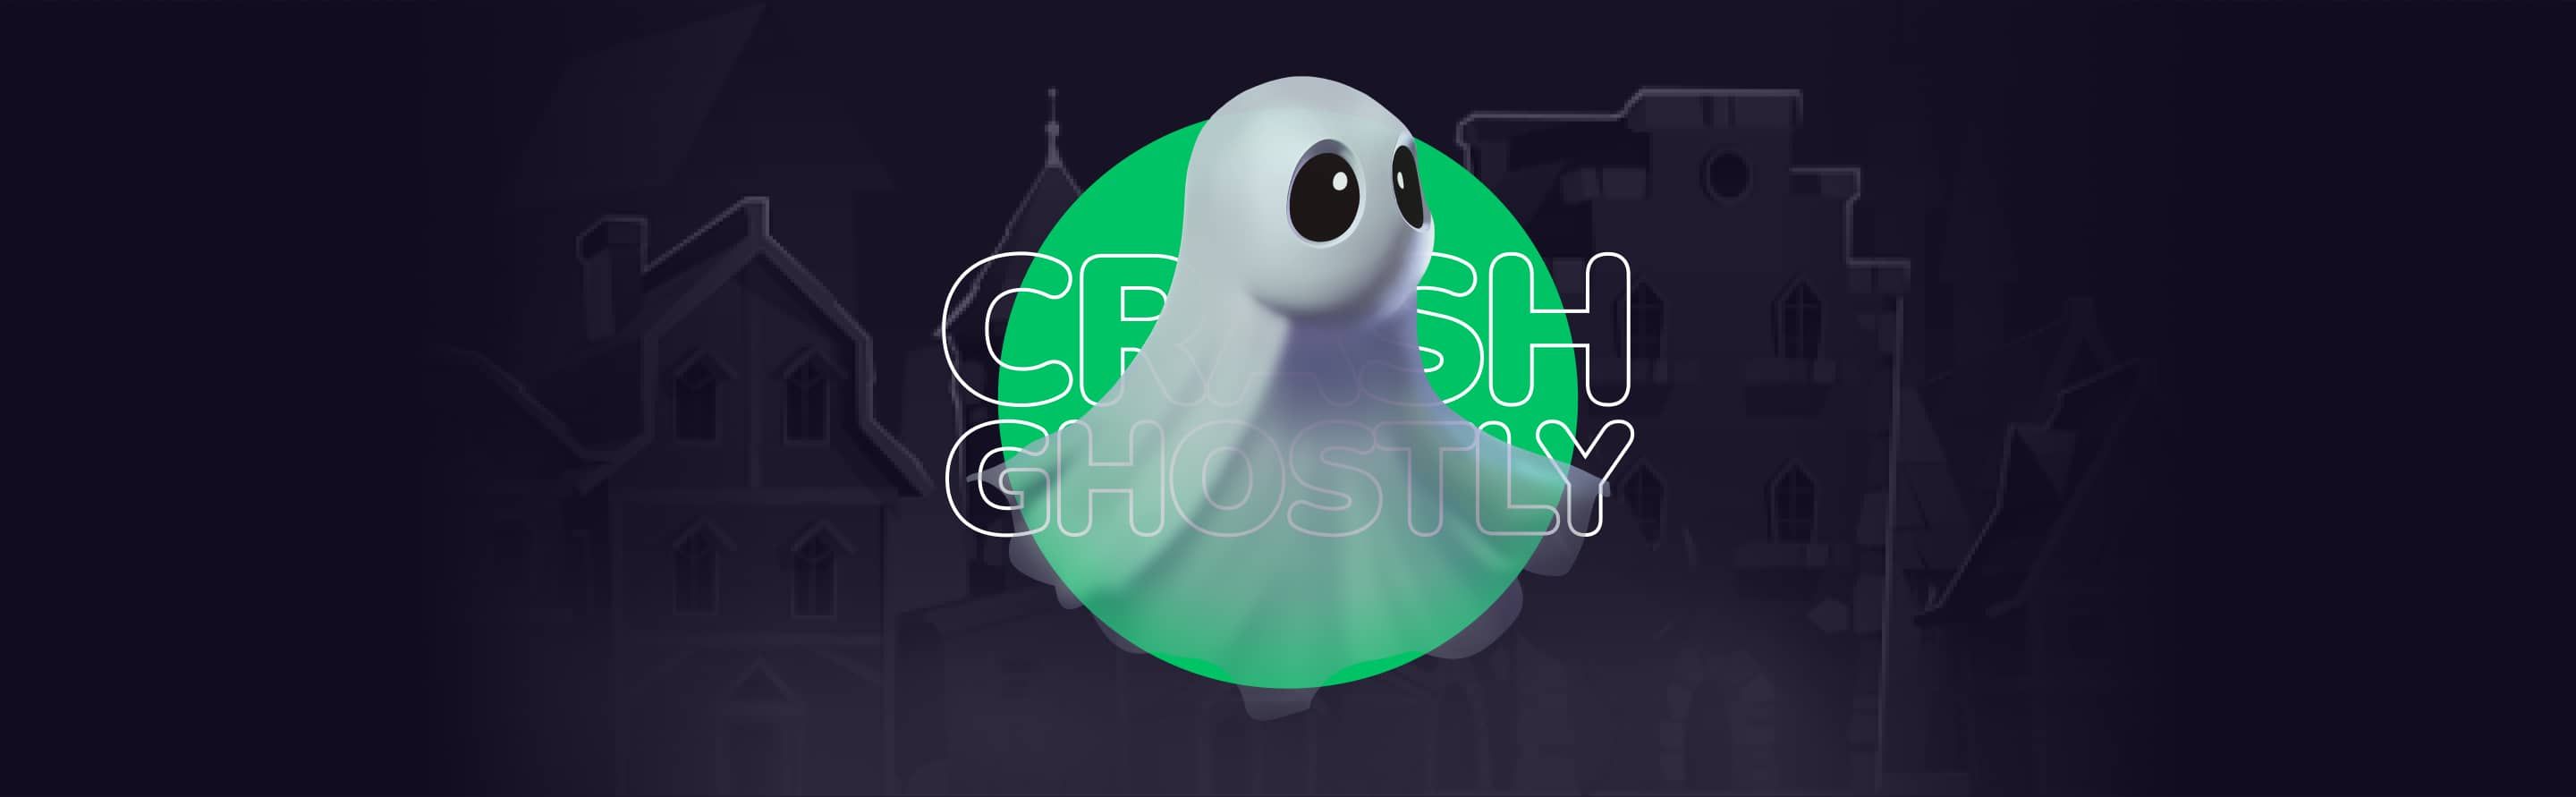 Crash Ghostly | Gameplay Banner